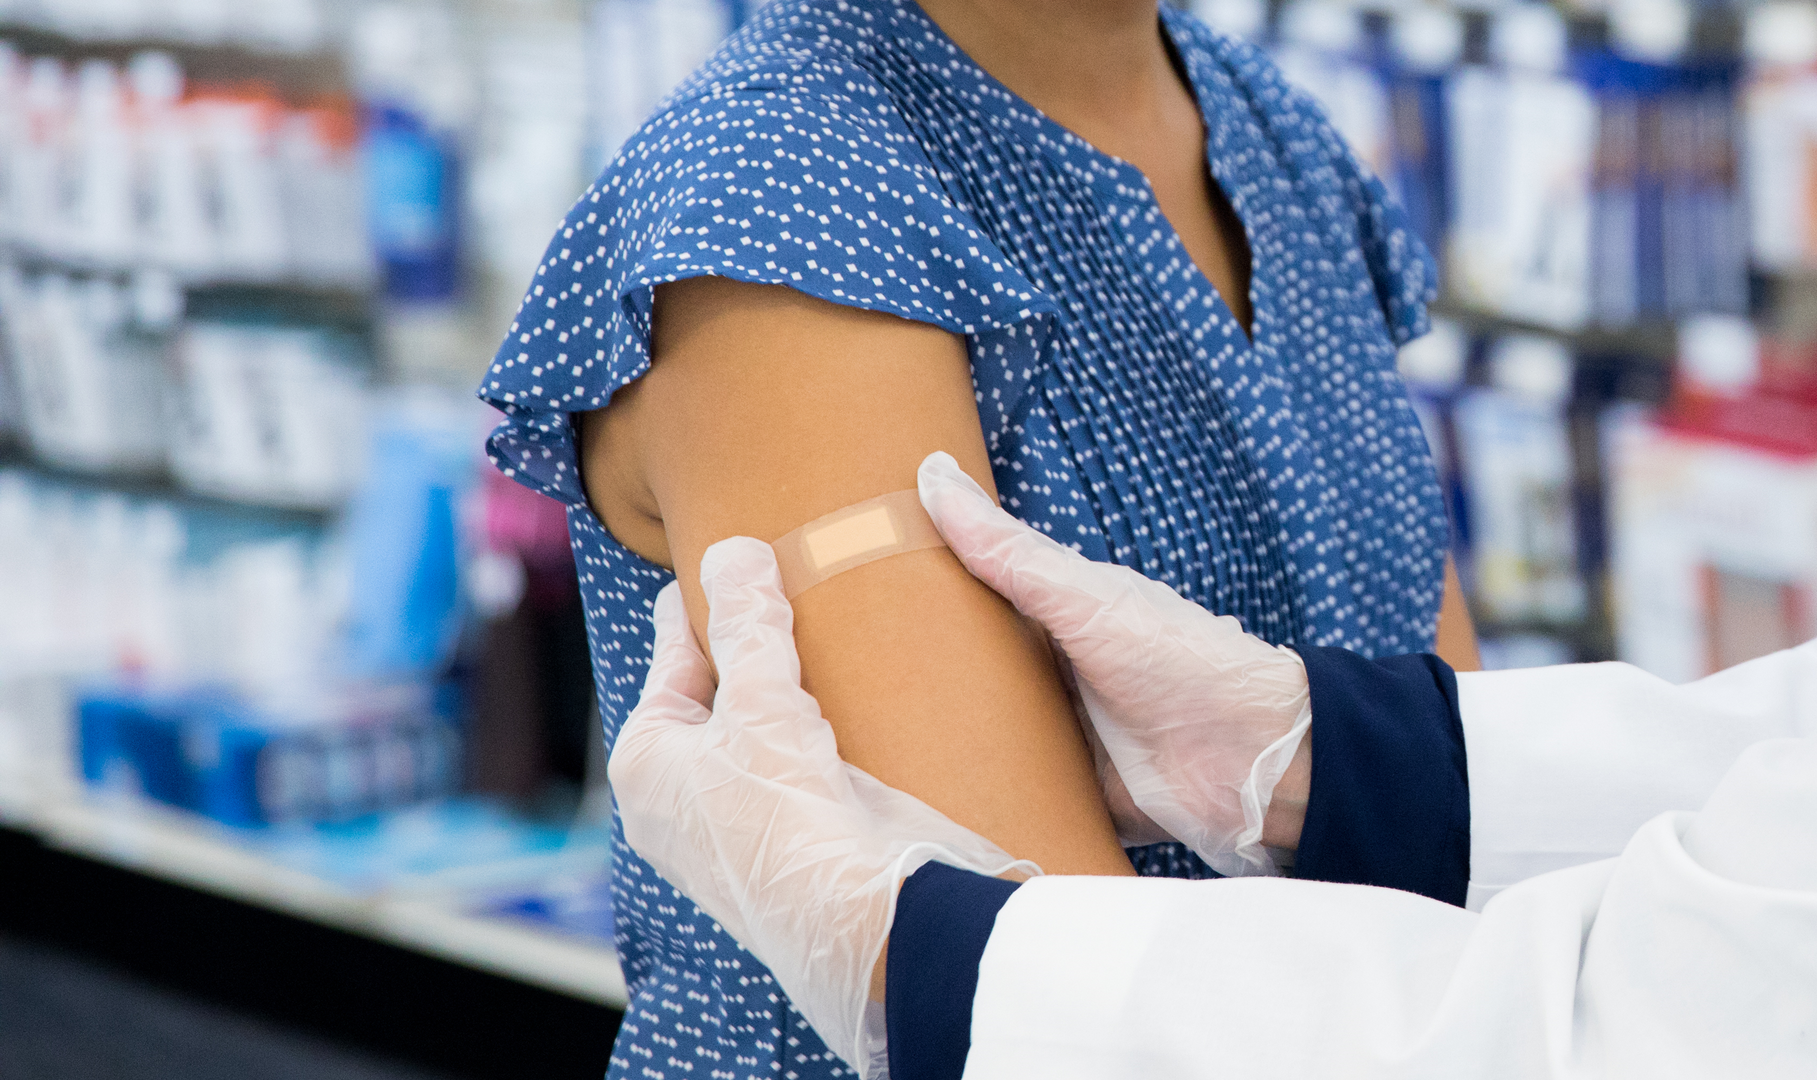 A pharmacist giving a patient a flu shot